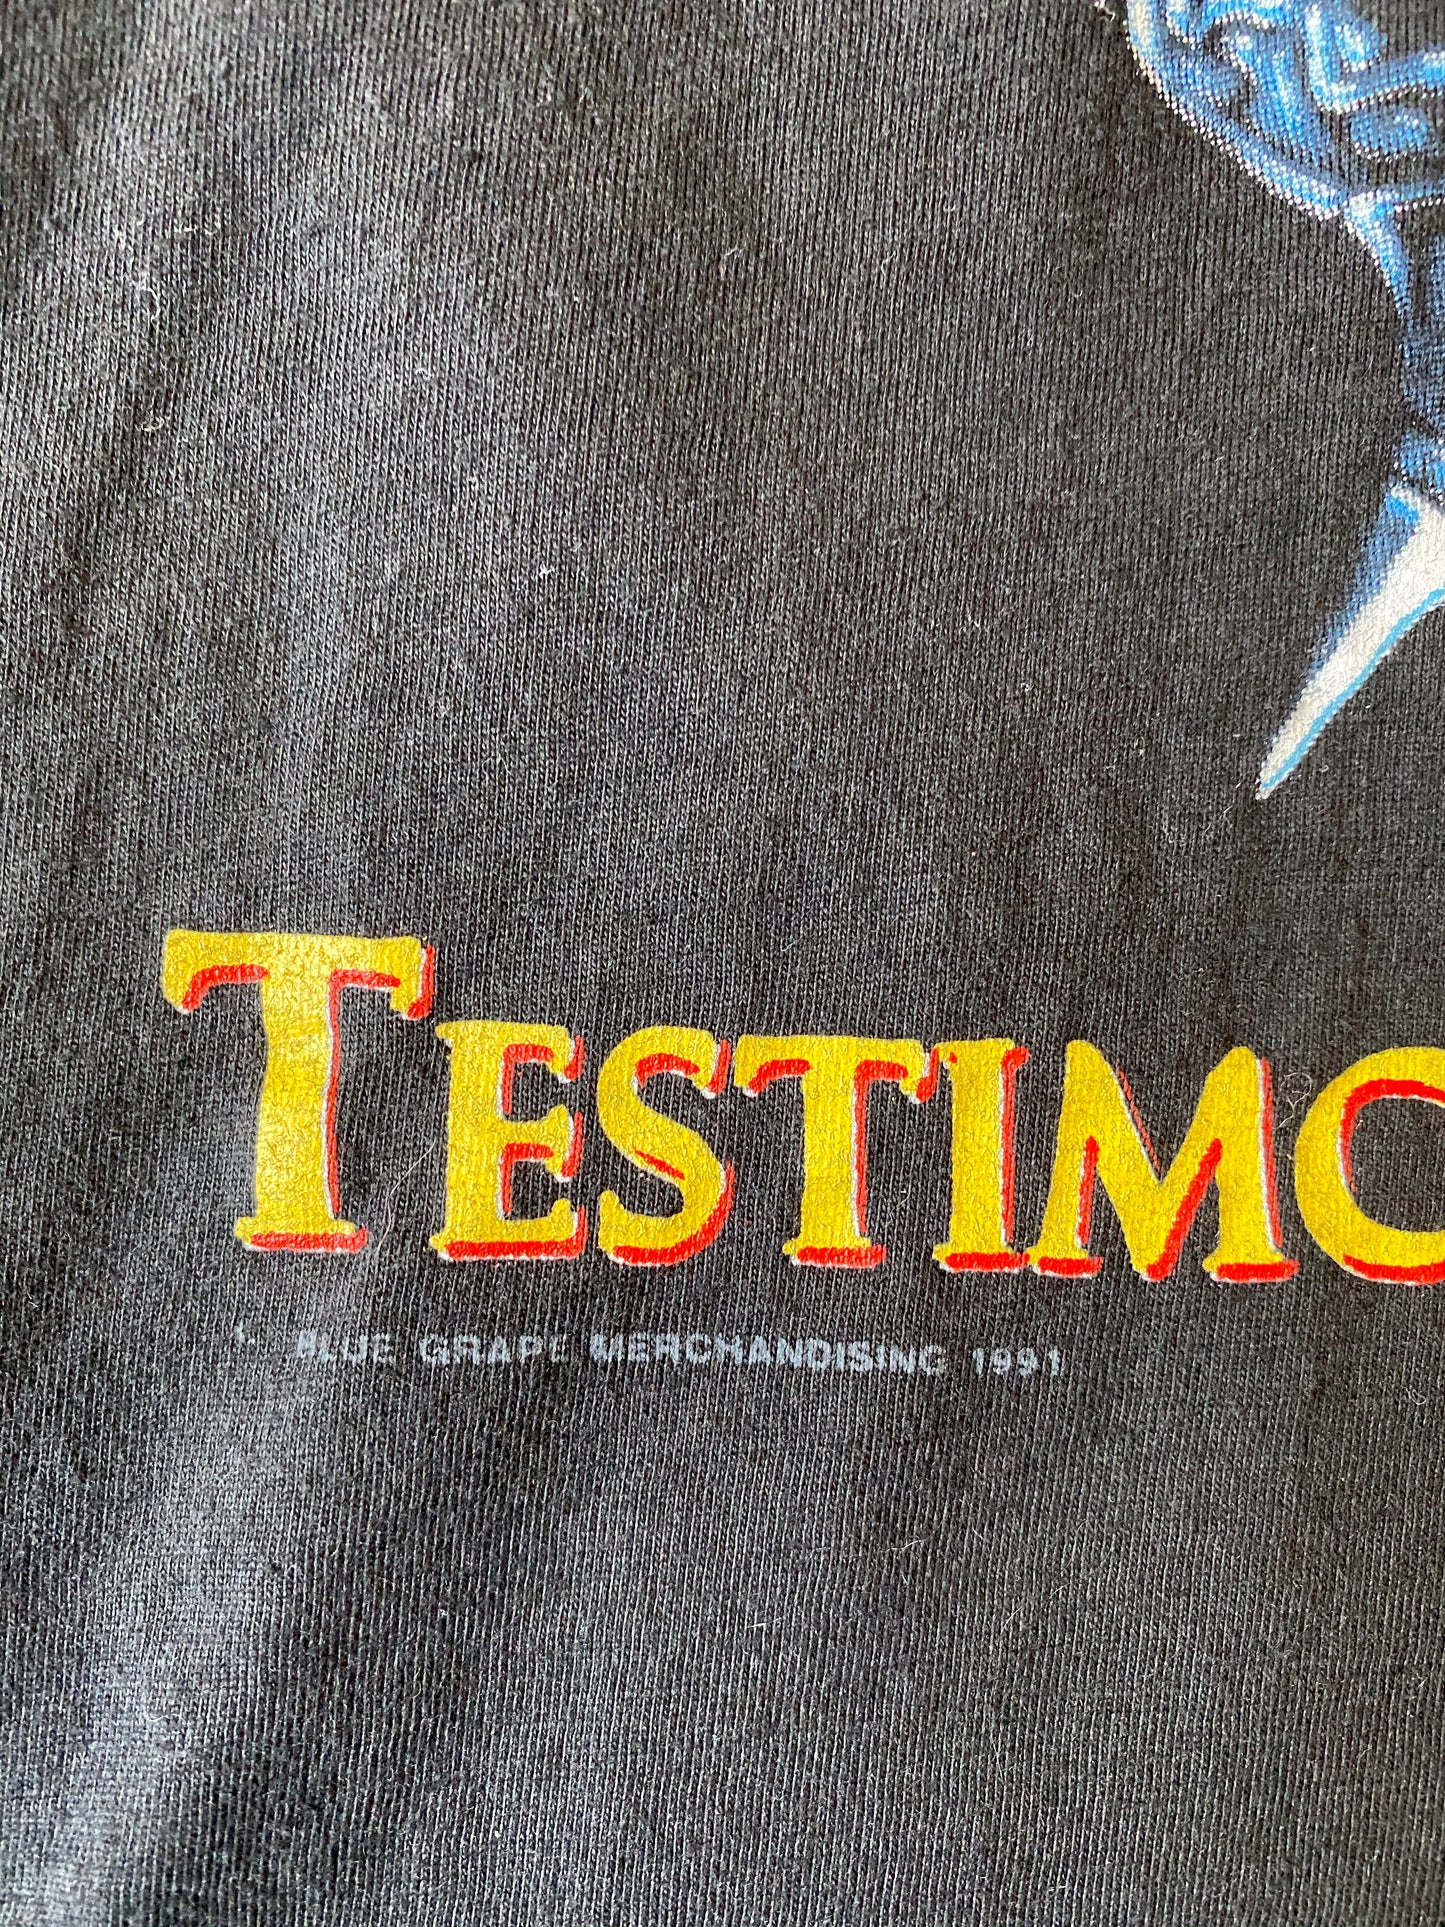 91/92 Pestilence Presence of the Pest Tour Shirt